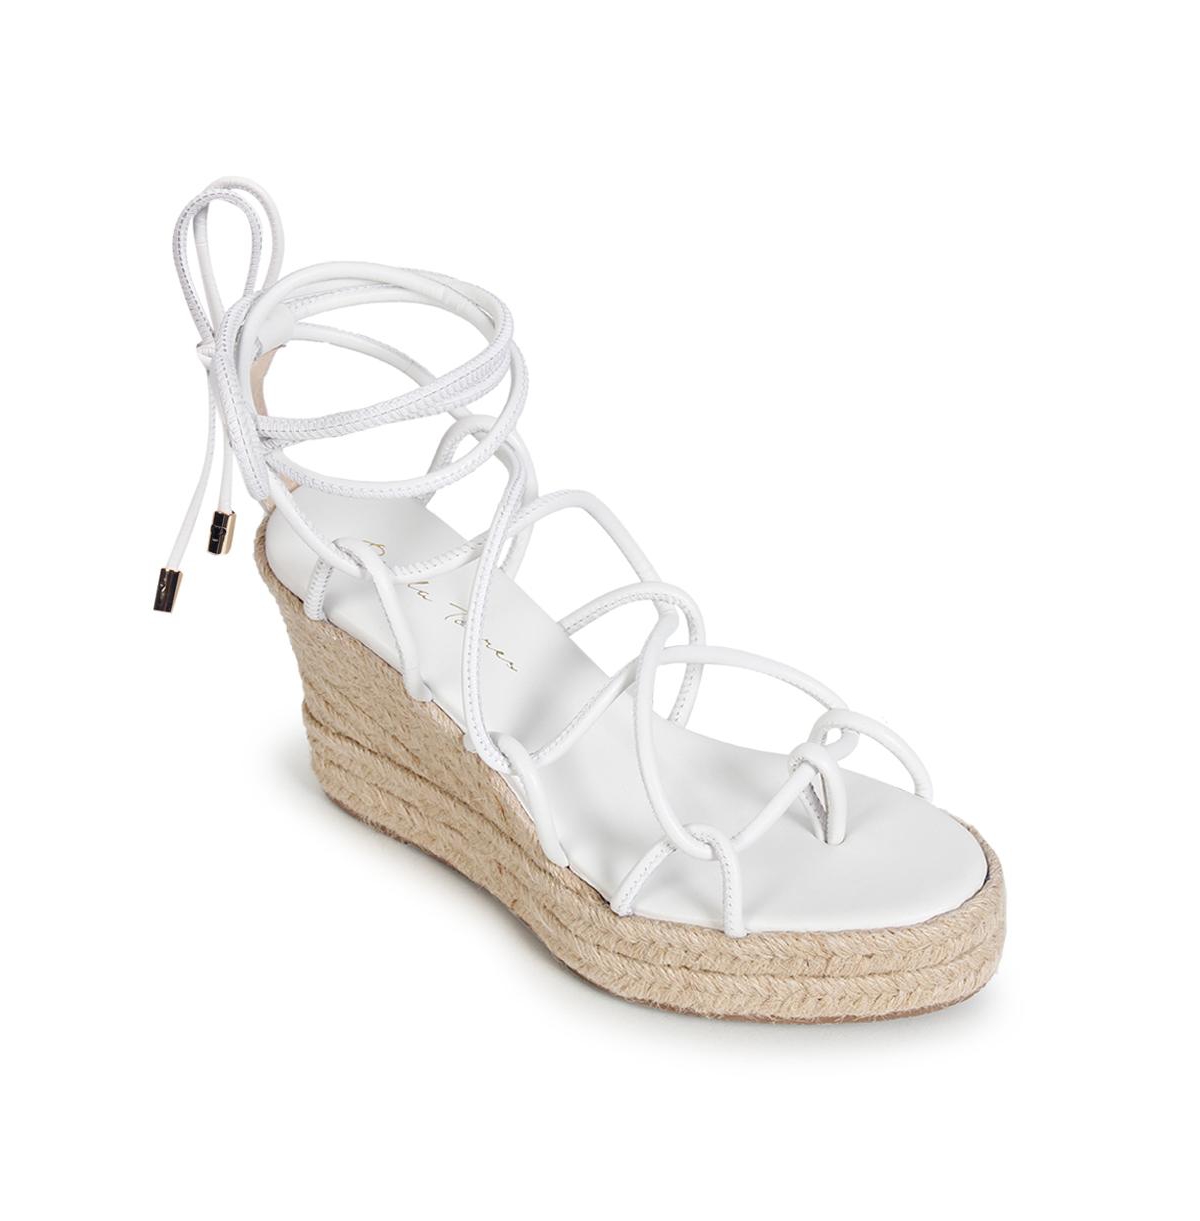 Shoes Women's Mel Platform Espadrille Wedge Sandals - Off white